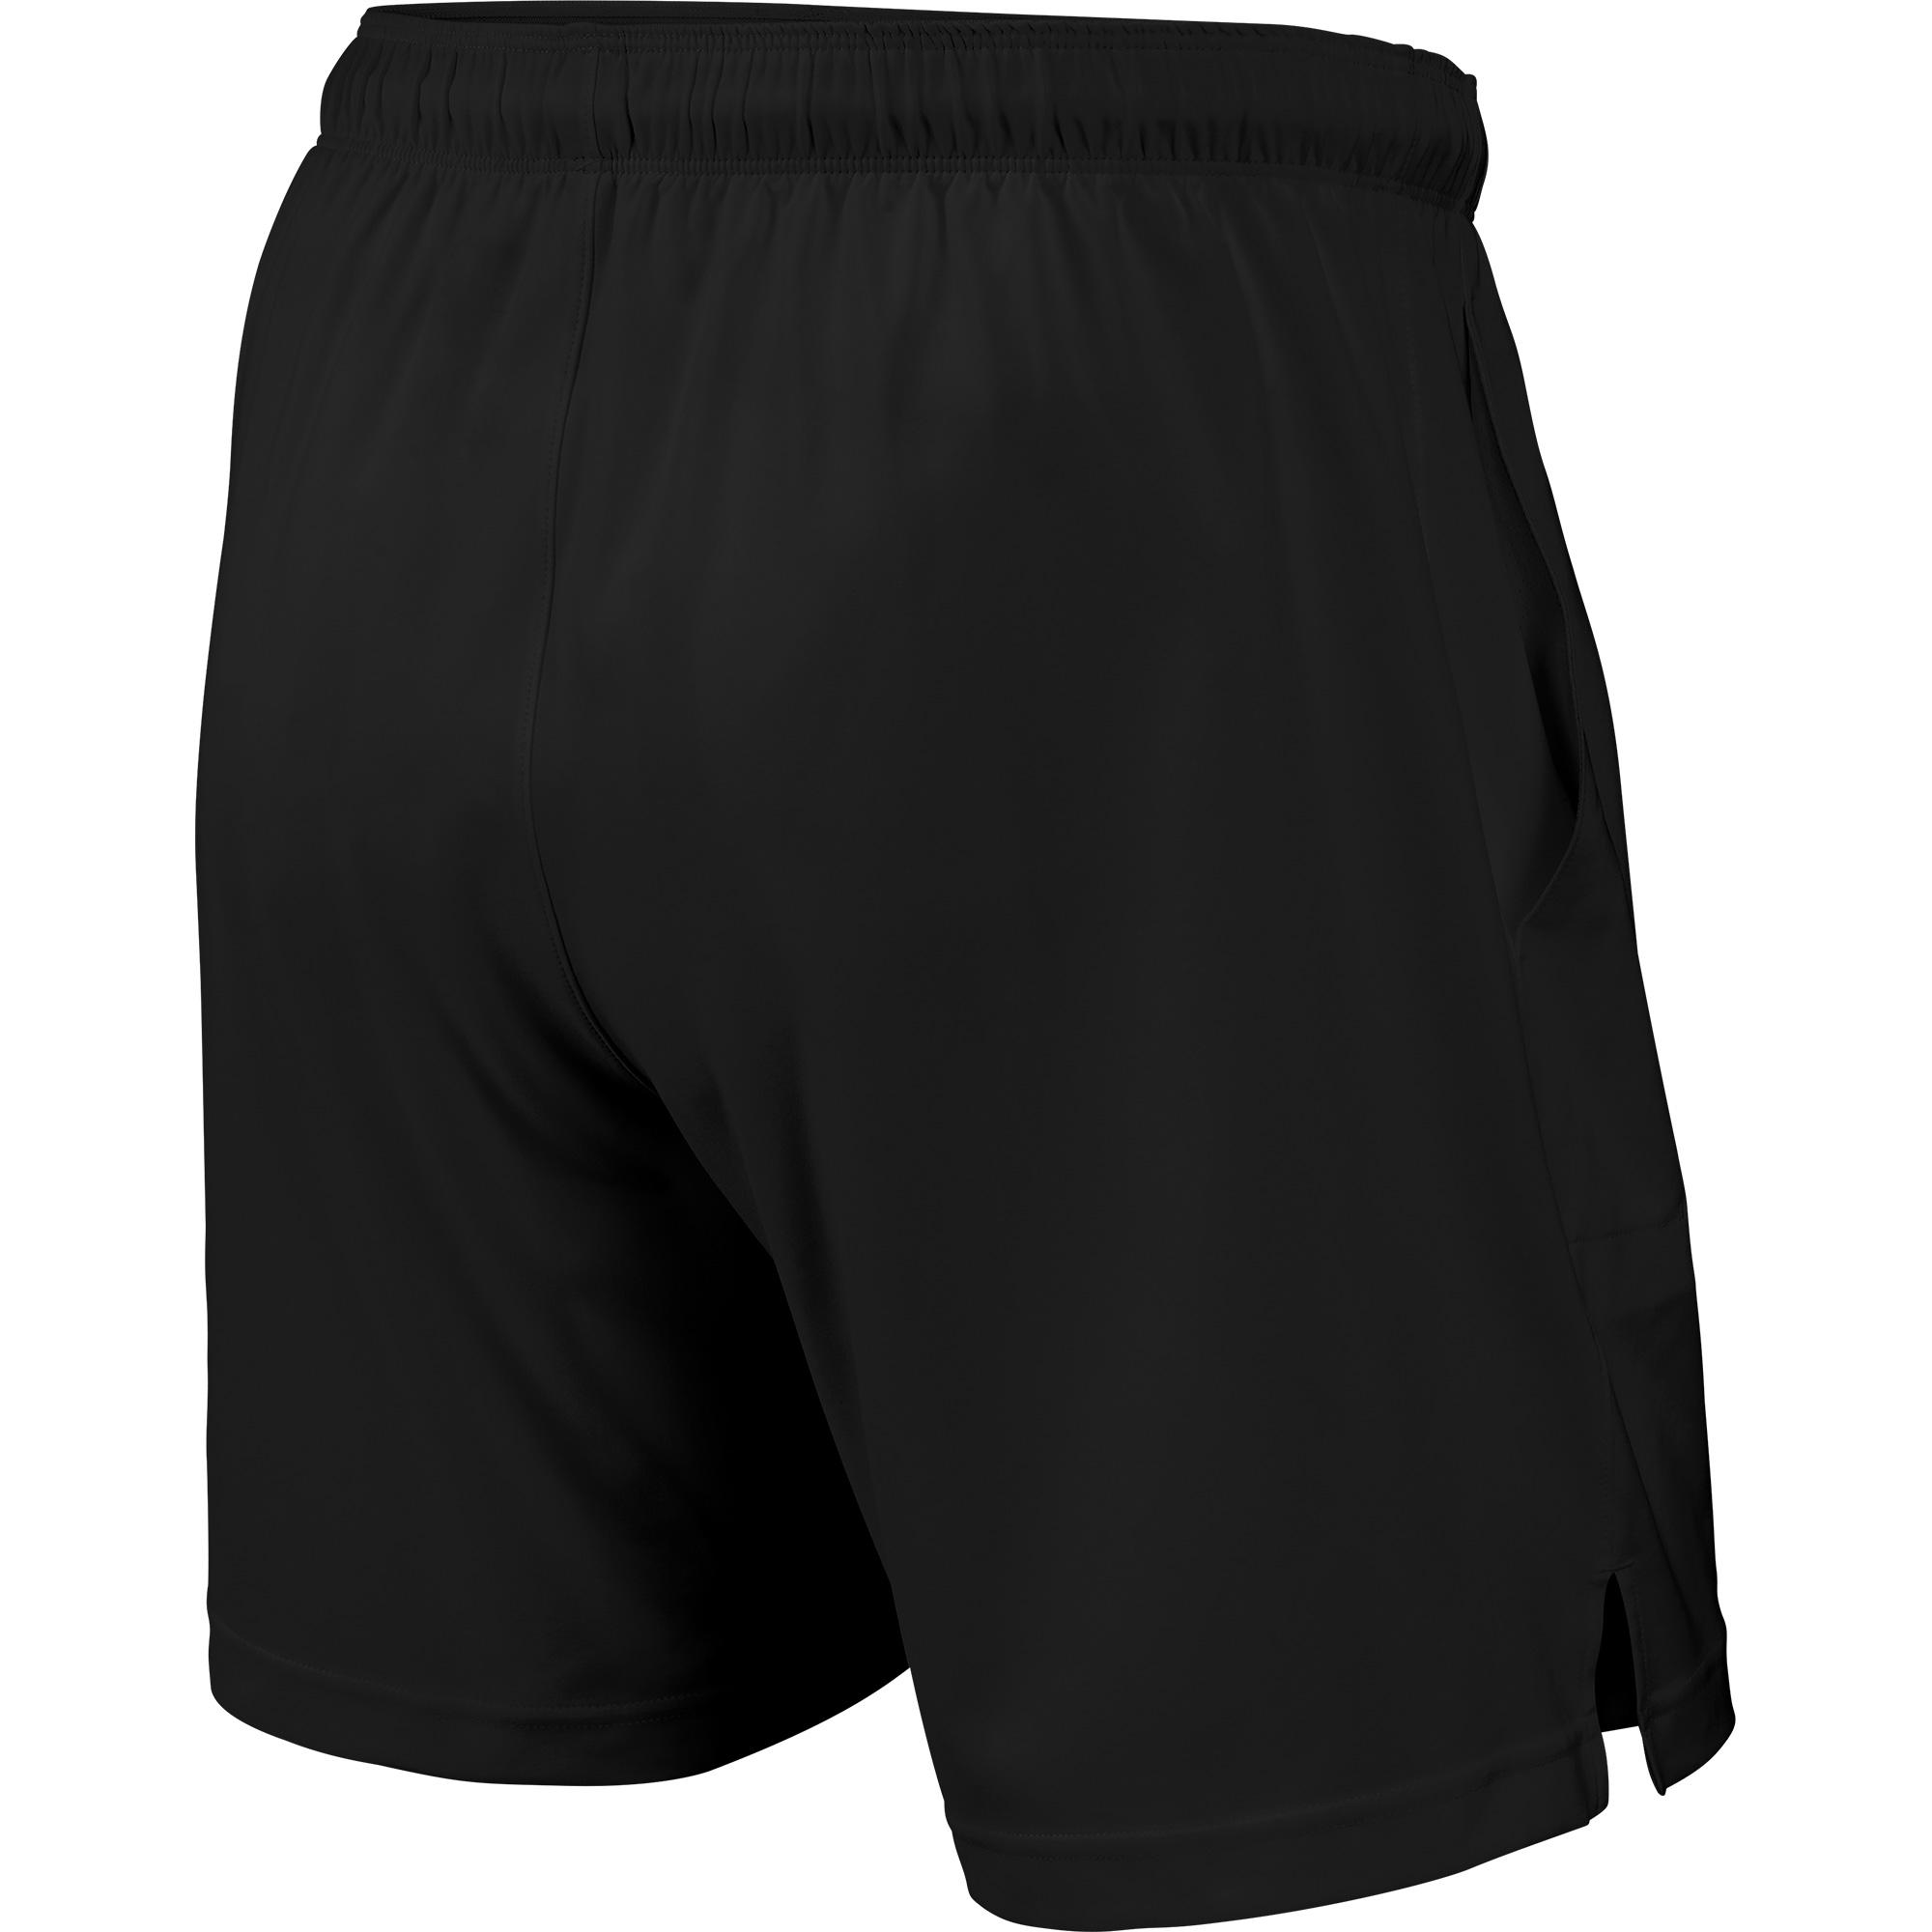 Wilson Mens Rush 7 Inch Woven Shorts - Black - Tennisnuts.com